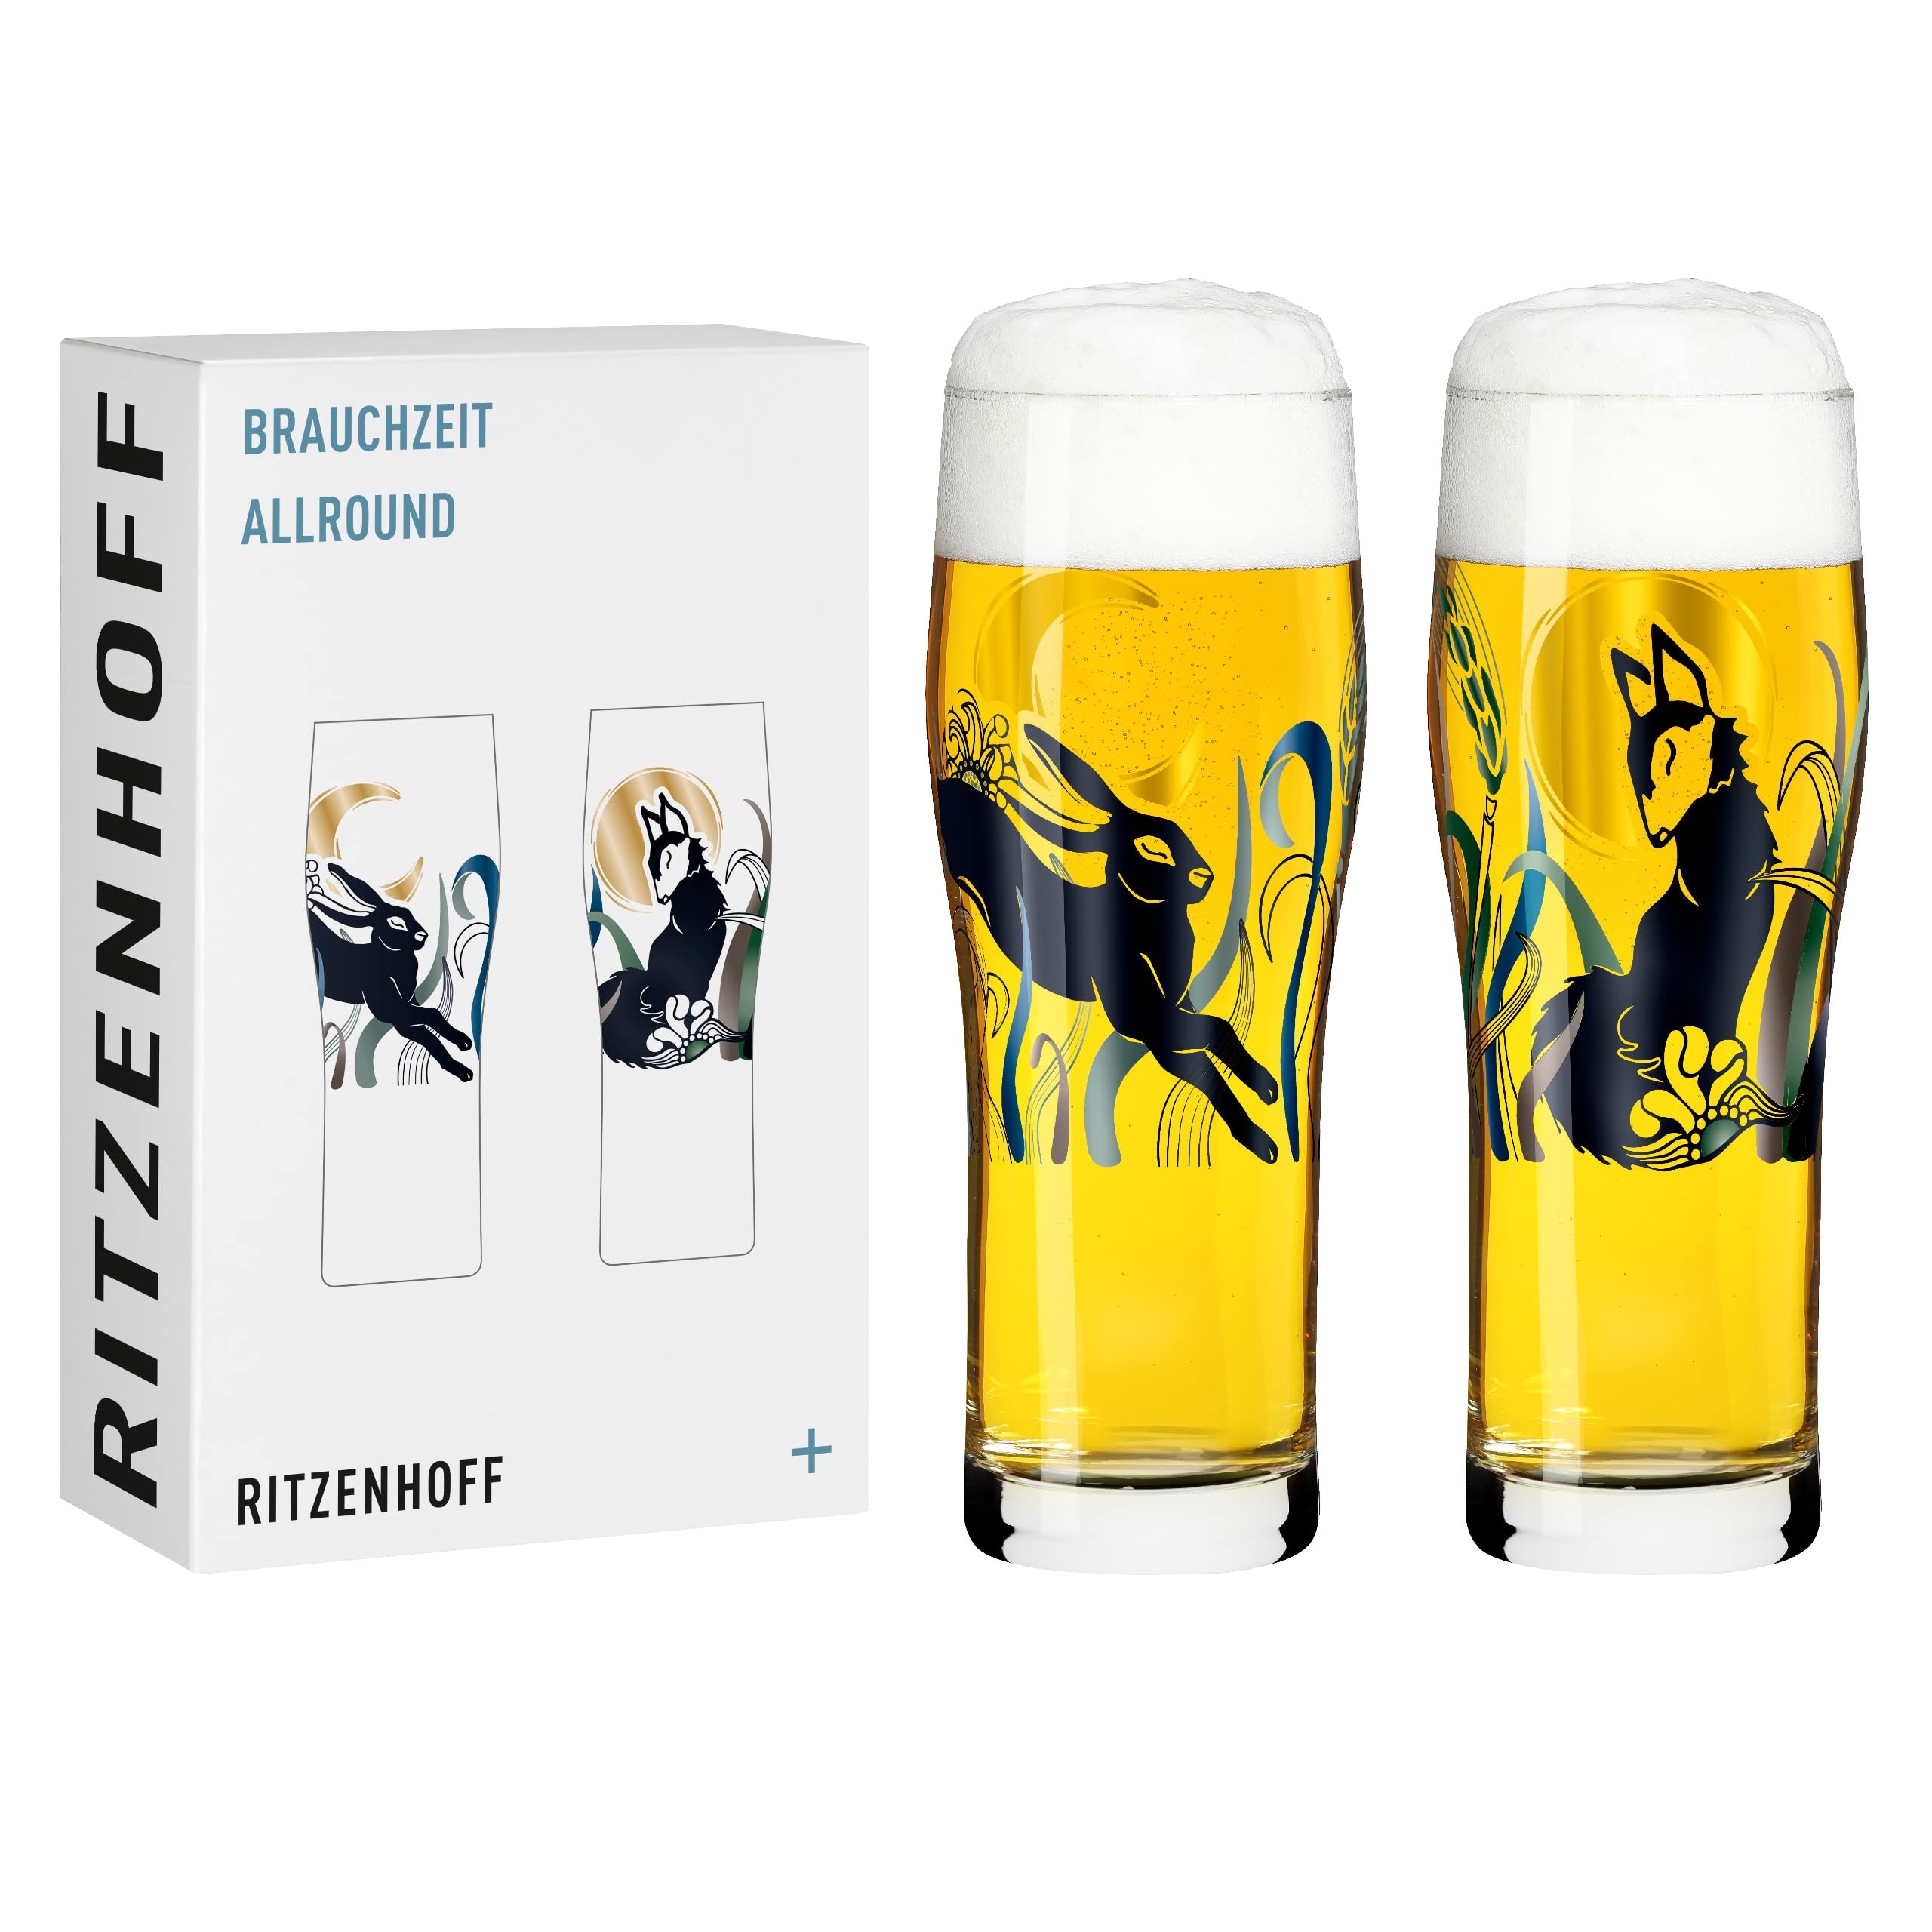 RITZENHOFF 3781001 Trinkglas universal 600 ml – Serie Brauchzeit Nr. 1 – 2 Stk. mit abgestimmtem Motiv – Made in Germany